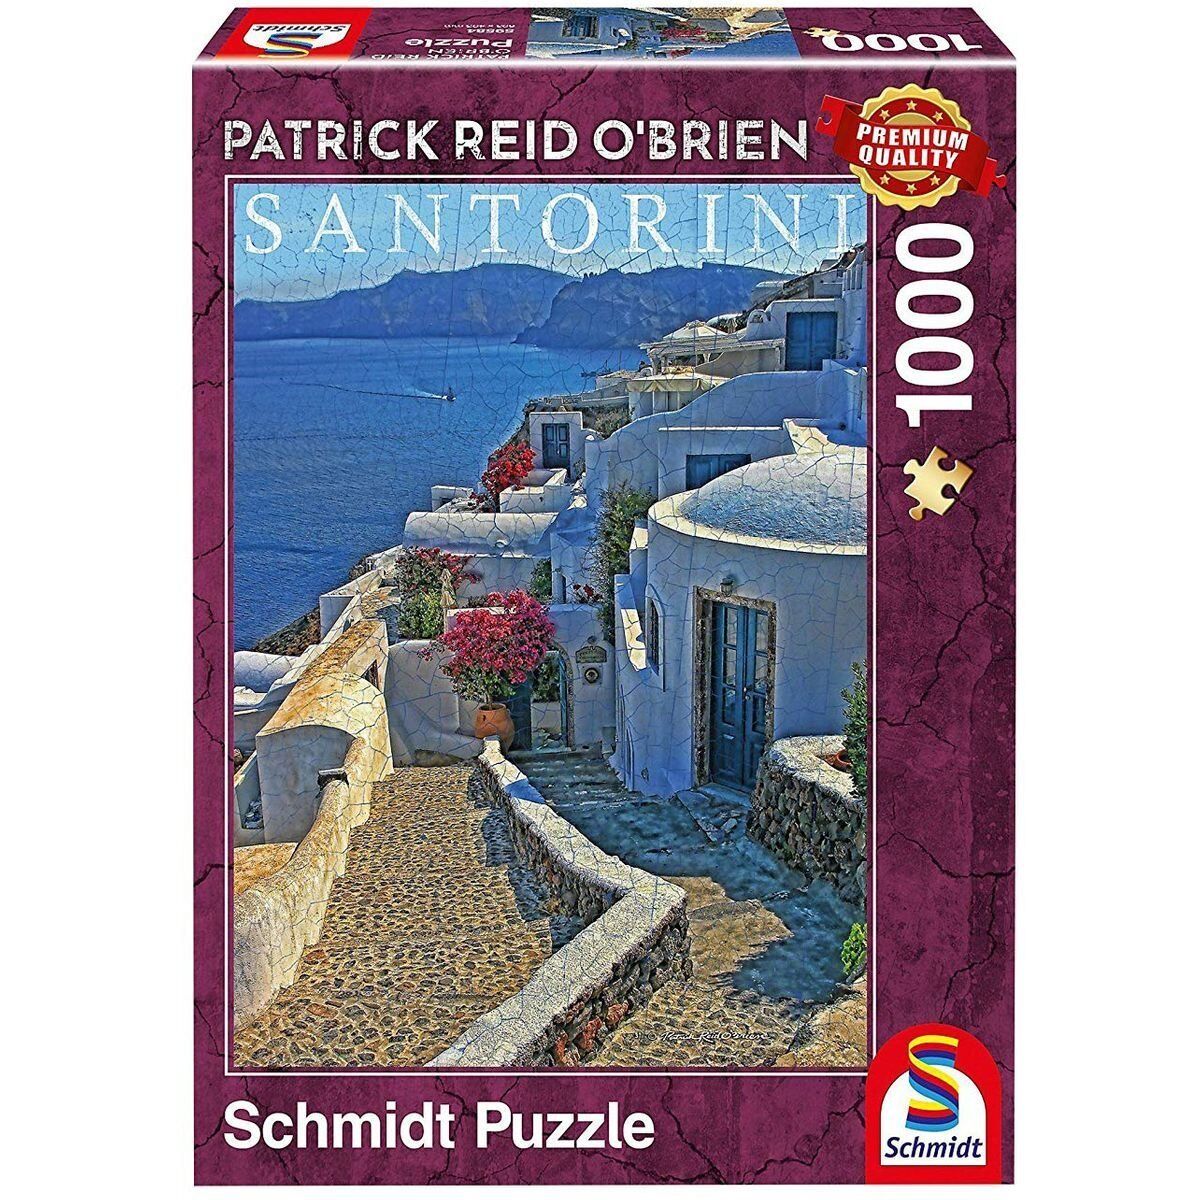 Puzzle 1000 Patrick Reid O'Brien Santorini